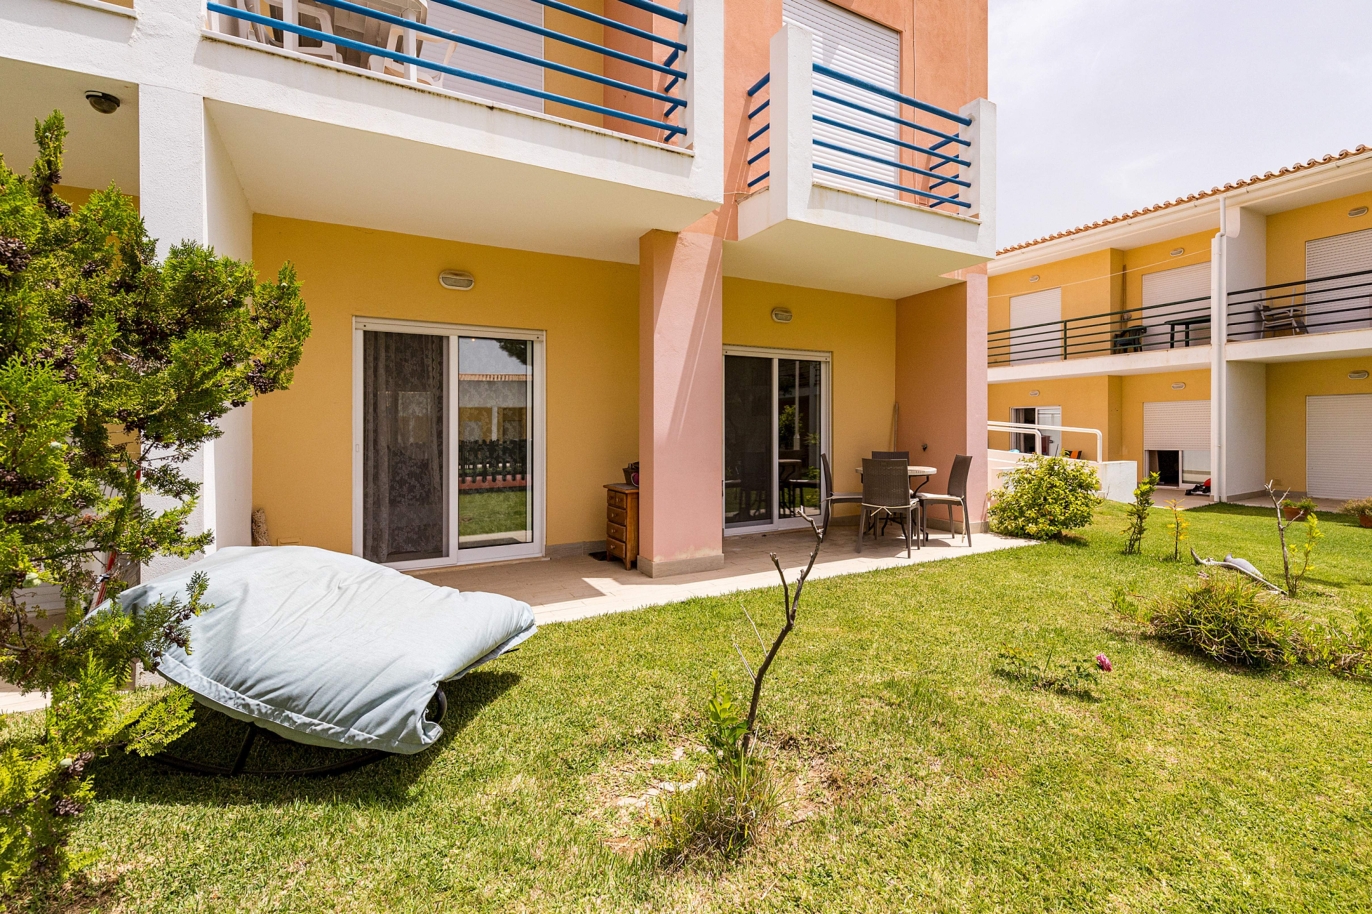 Apartamento T2, em condominio, para venda, Albufeira, Algarve_201462